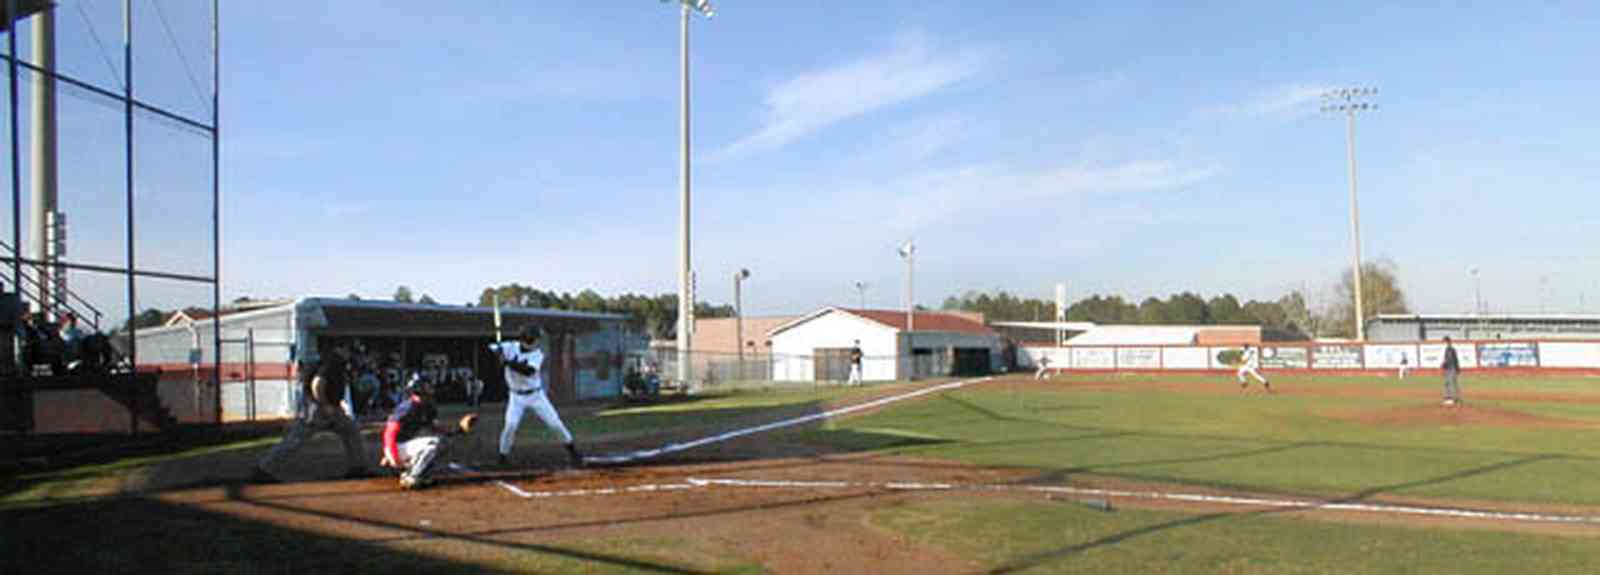 Pensacola:-Tate-High-School_05.jpg:  pitcher, shortstop, catcher, baseball player, ball field, escambia county, gonzales